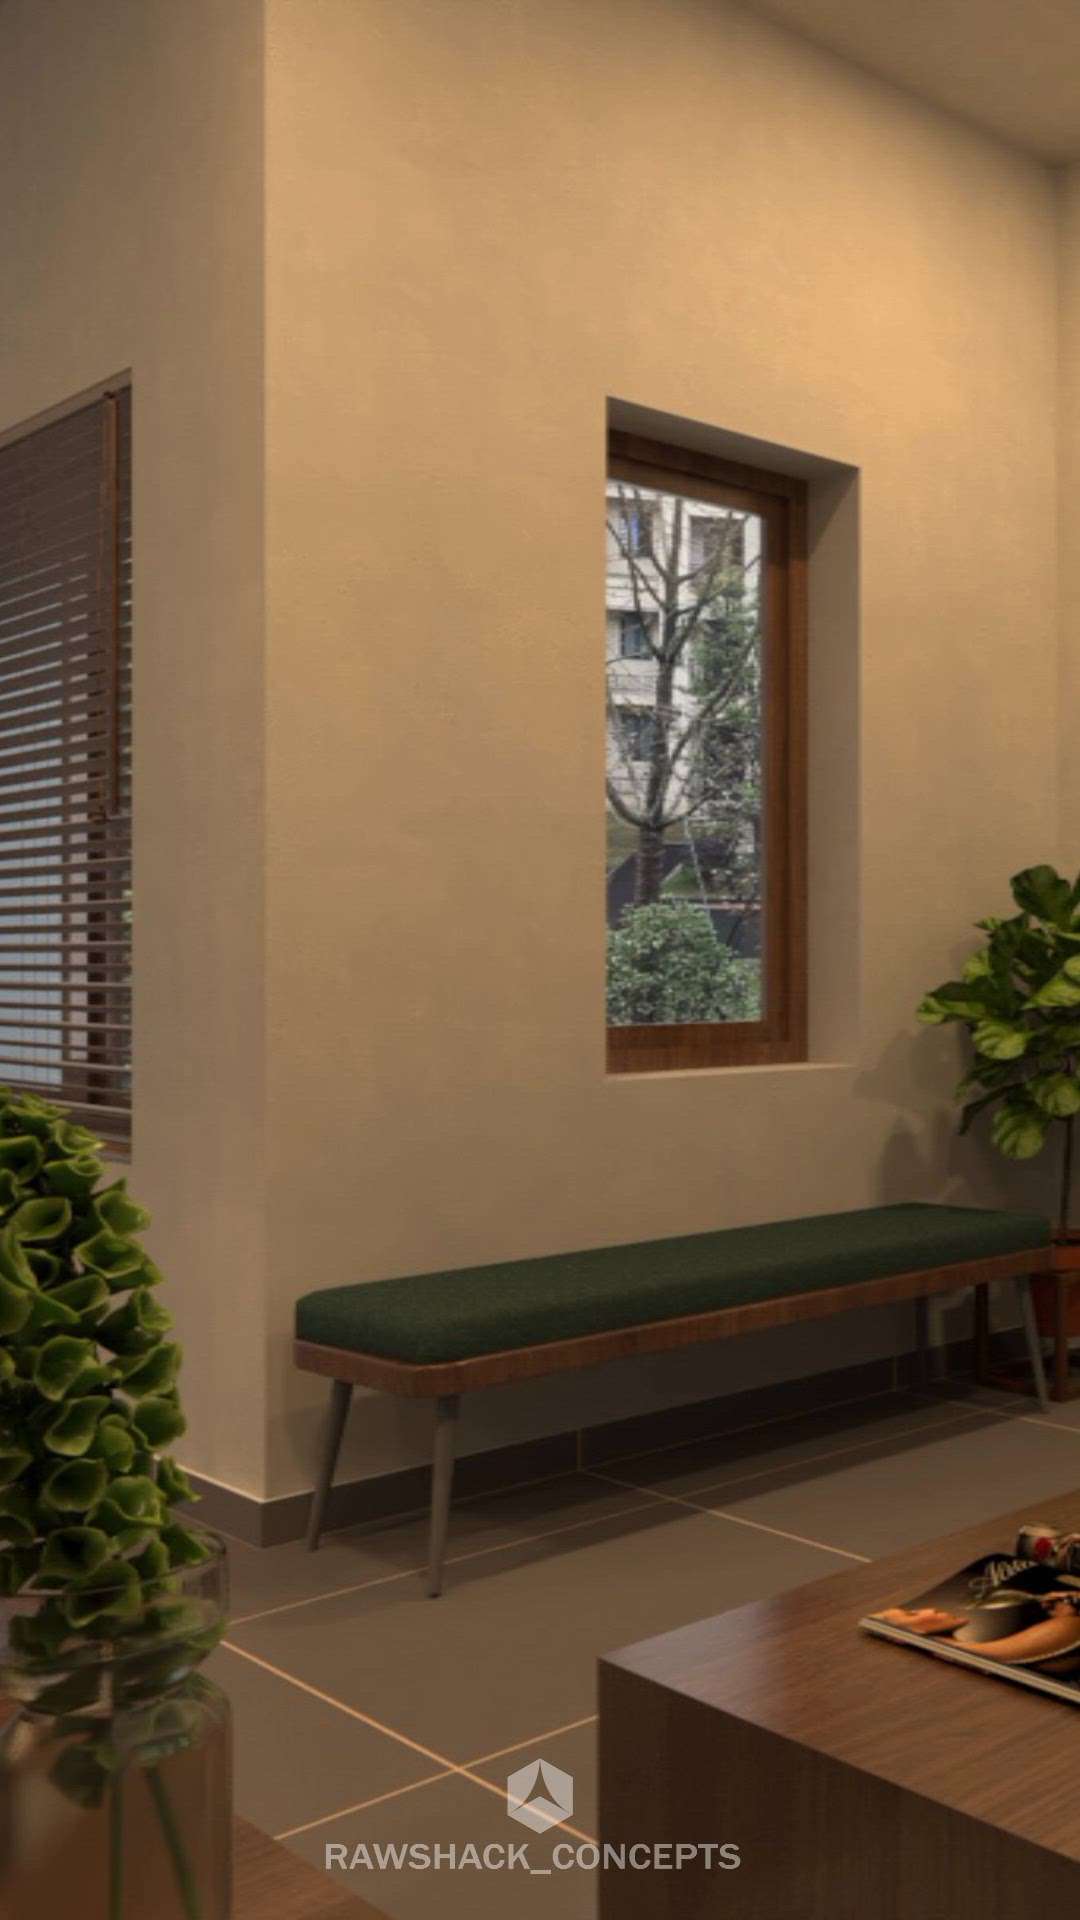 Living Room Interior for Mr. Tomy at Thrissur 
#residence #Architect #architecturedesigns #design #keralaarchitecture #woods #rawshackconcepts #3drenders#interiordesign #interior